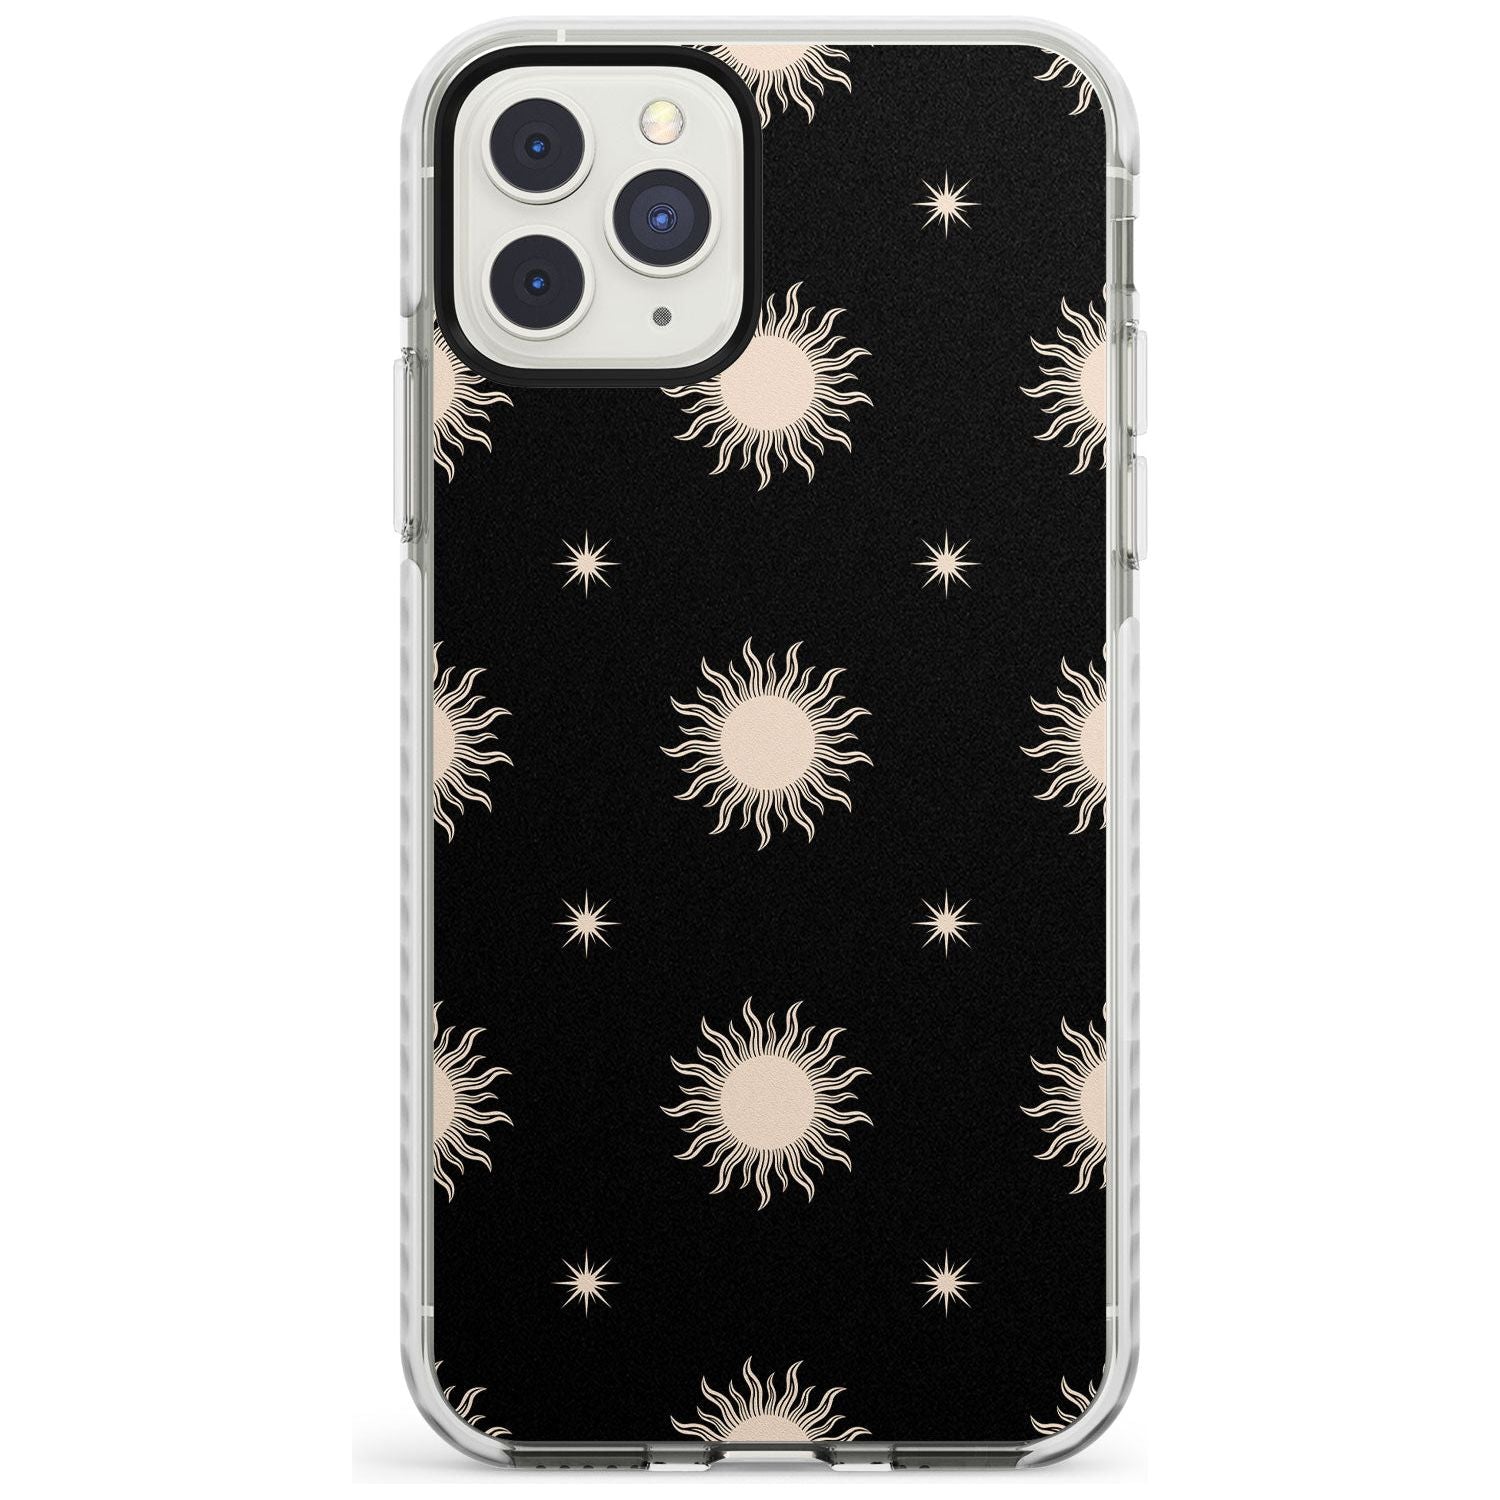 Celestial Patterns Classic Suns (Black) Phone Case iPhone 11 Pro Max / Impact Case,iPhone 11 Pro / Impact Case,iPhone 12 Pro / Impact Case,iPhone 12 Pro Max / Impact Case Blanc Space